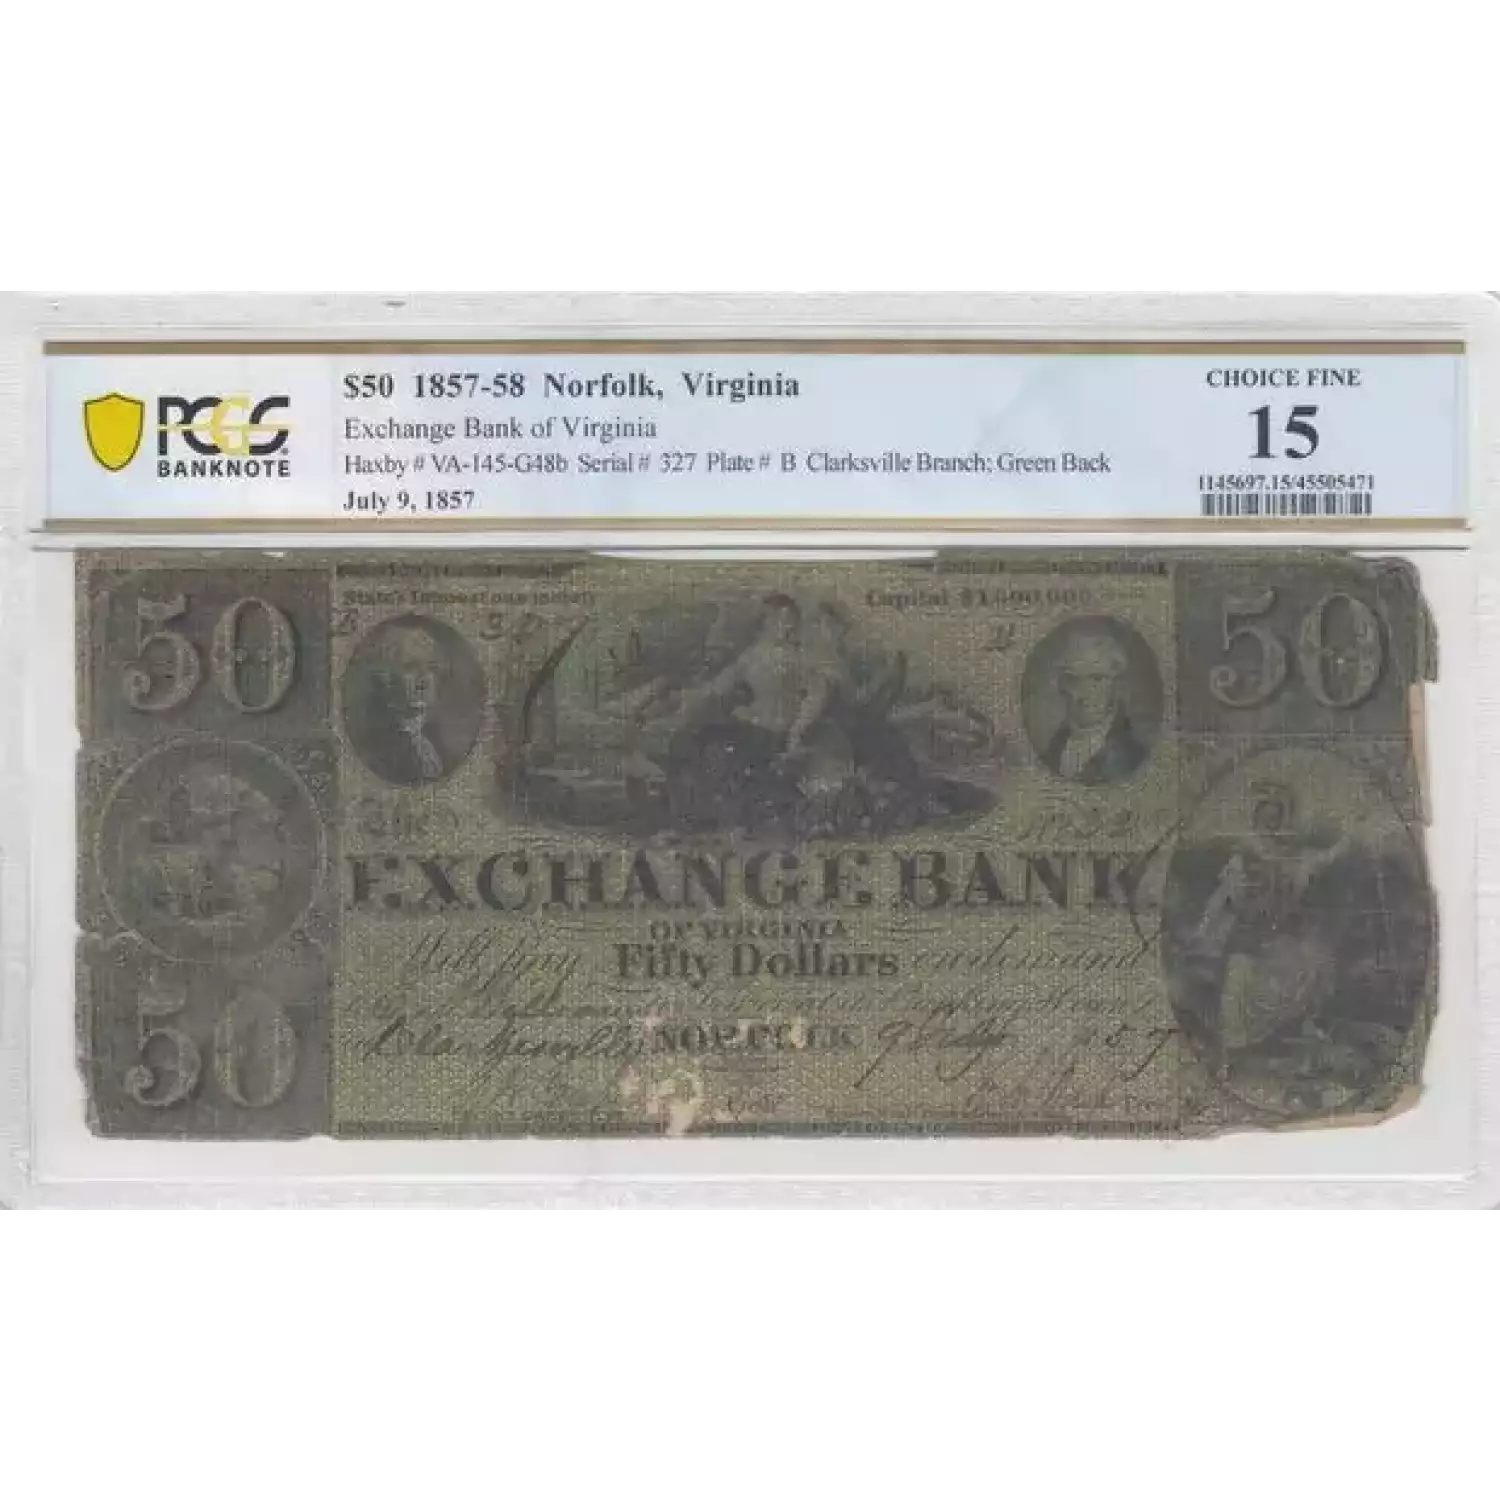 $50 1867-58 Norfolk, Virginia Exchange Bank of Virginia 